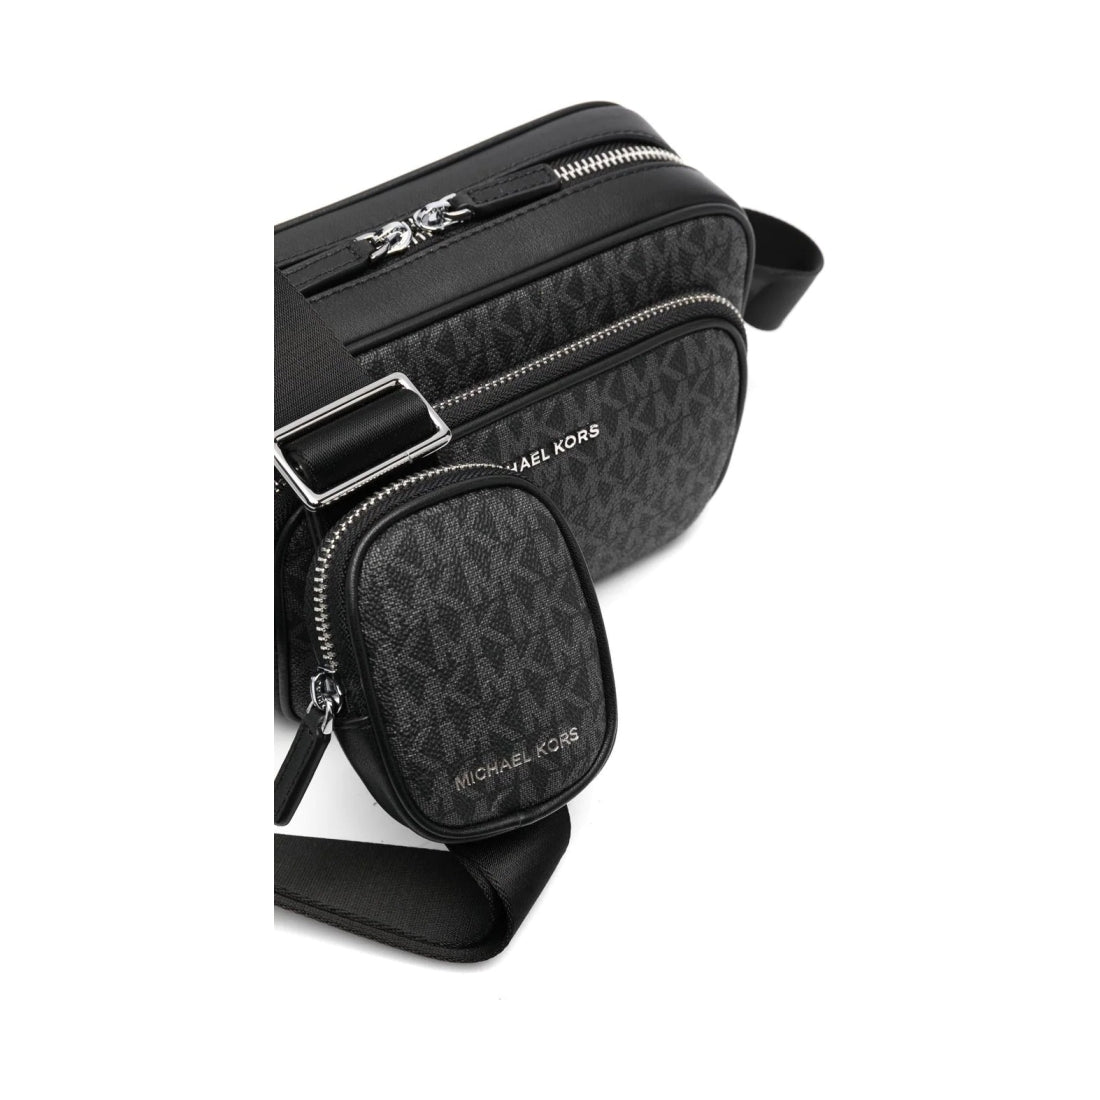 Michael Kors mens black camera bag with pouch | Vilbury London